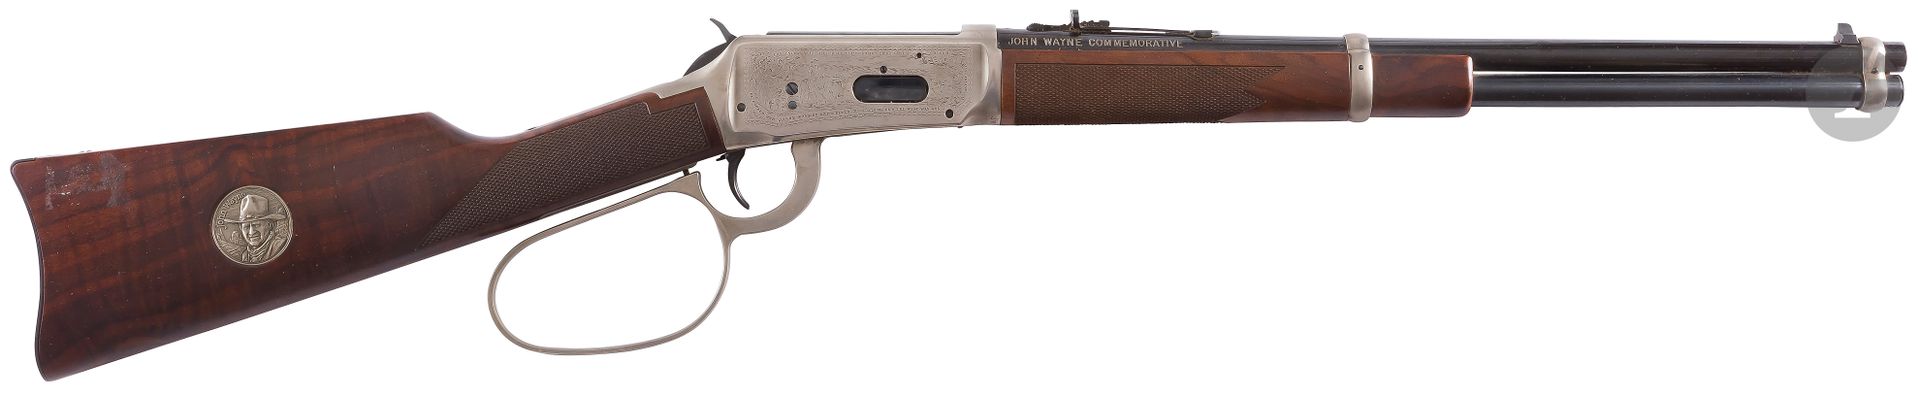 Null Winchester 94 "John Wayne Commemorative" rifle, 32-40 caliber,
engraved sil&hellip;